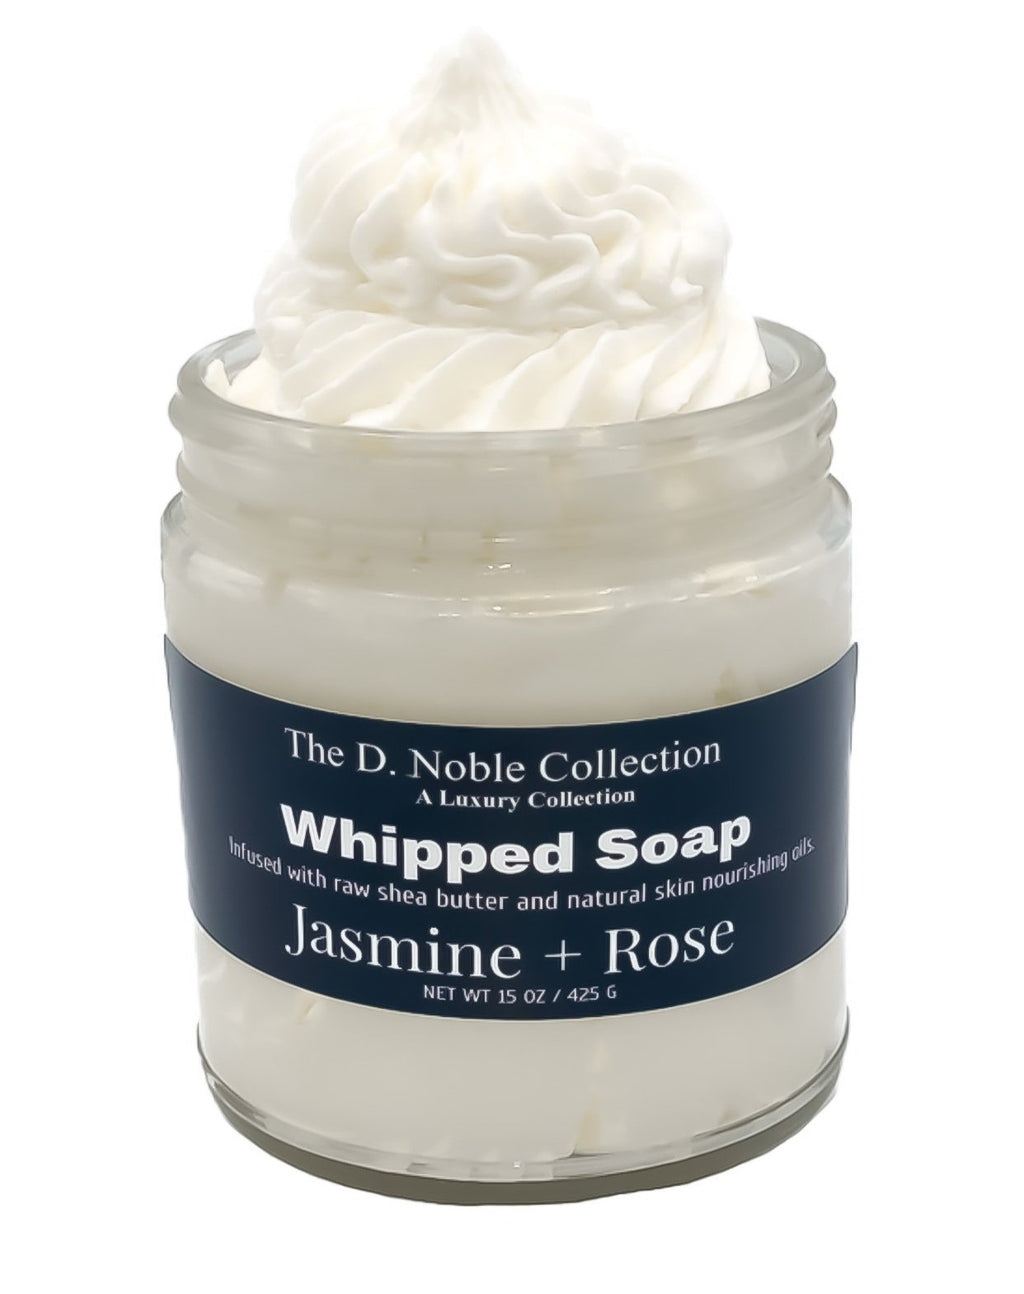 Jasmine + Rose Whipped Soap